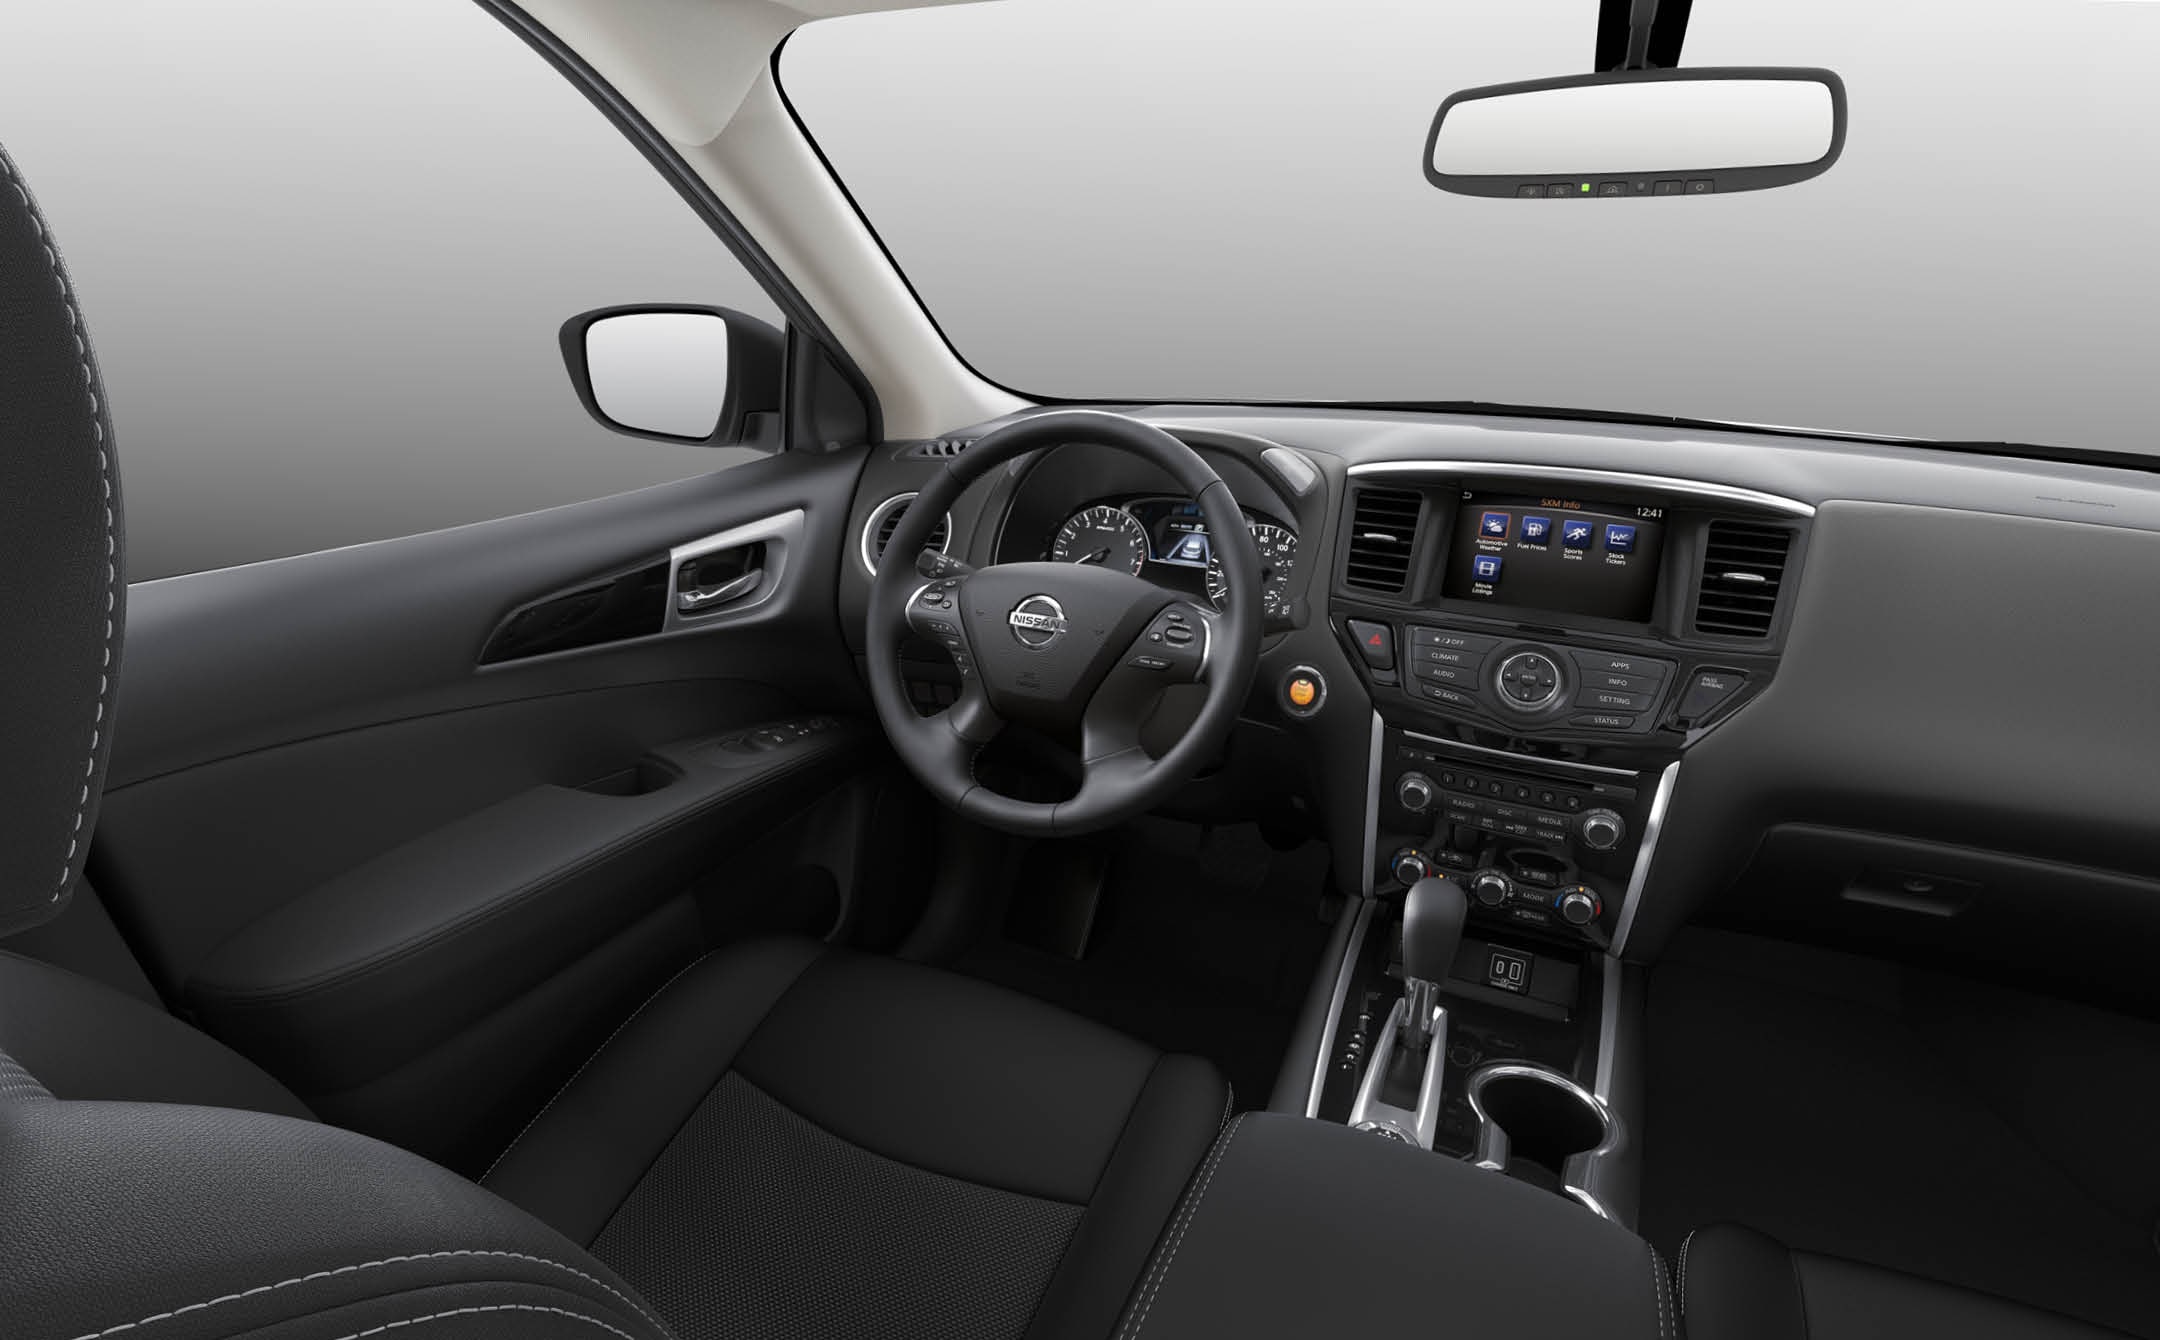 Nissan Pathfinder Interiors 2020 Nissan Pathfinder